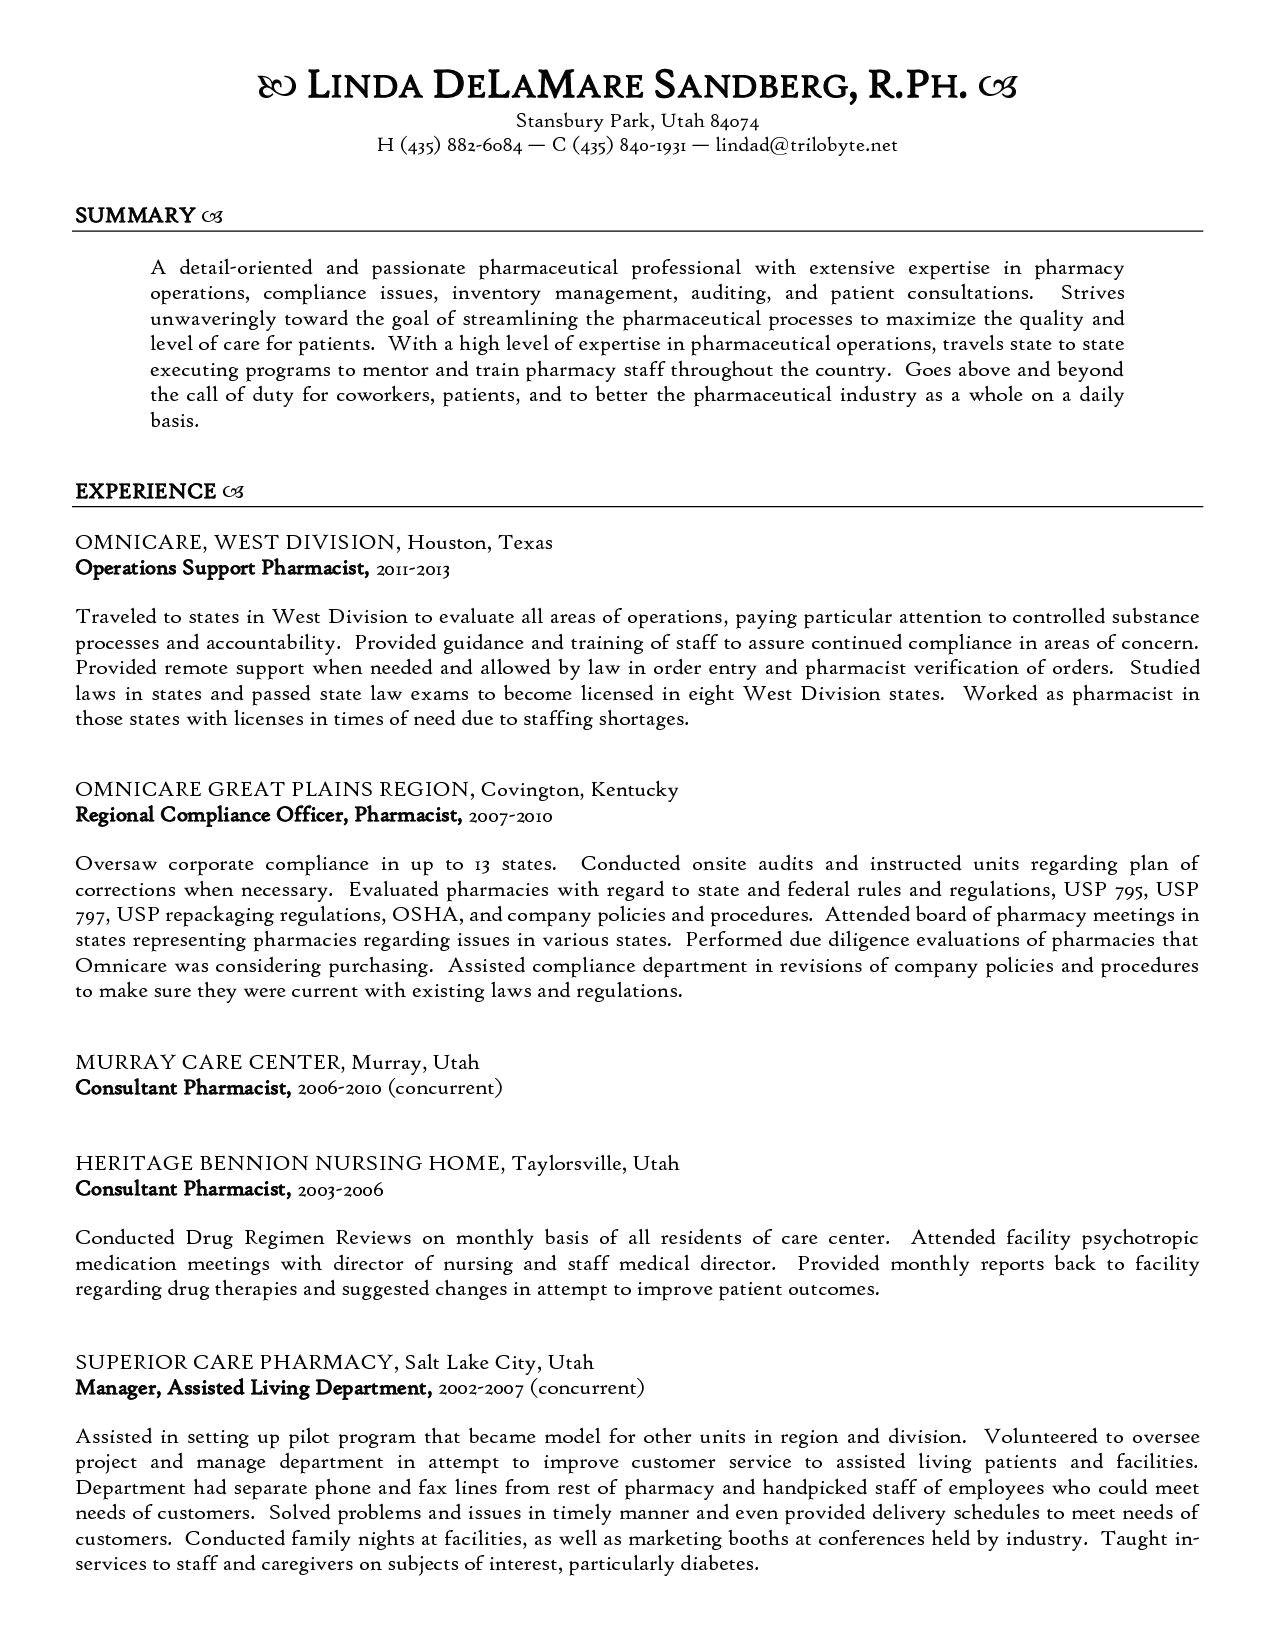 pharmacist resume sample canada